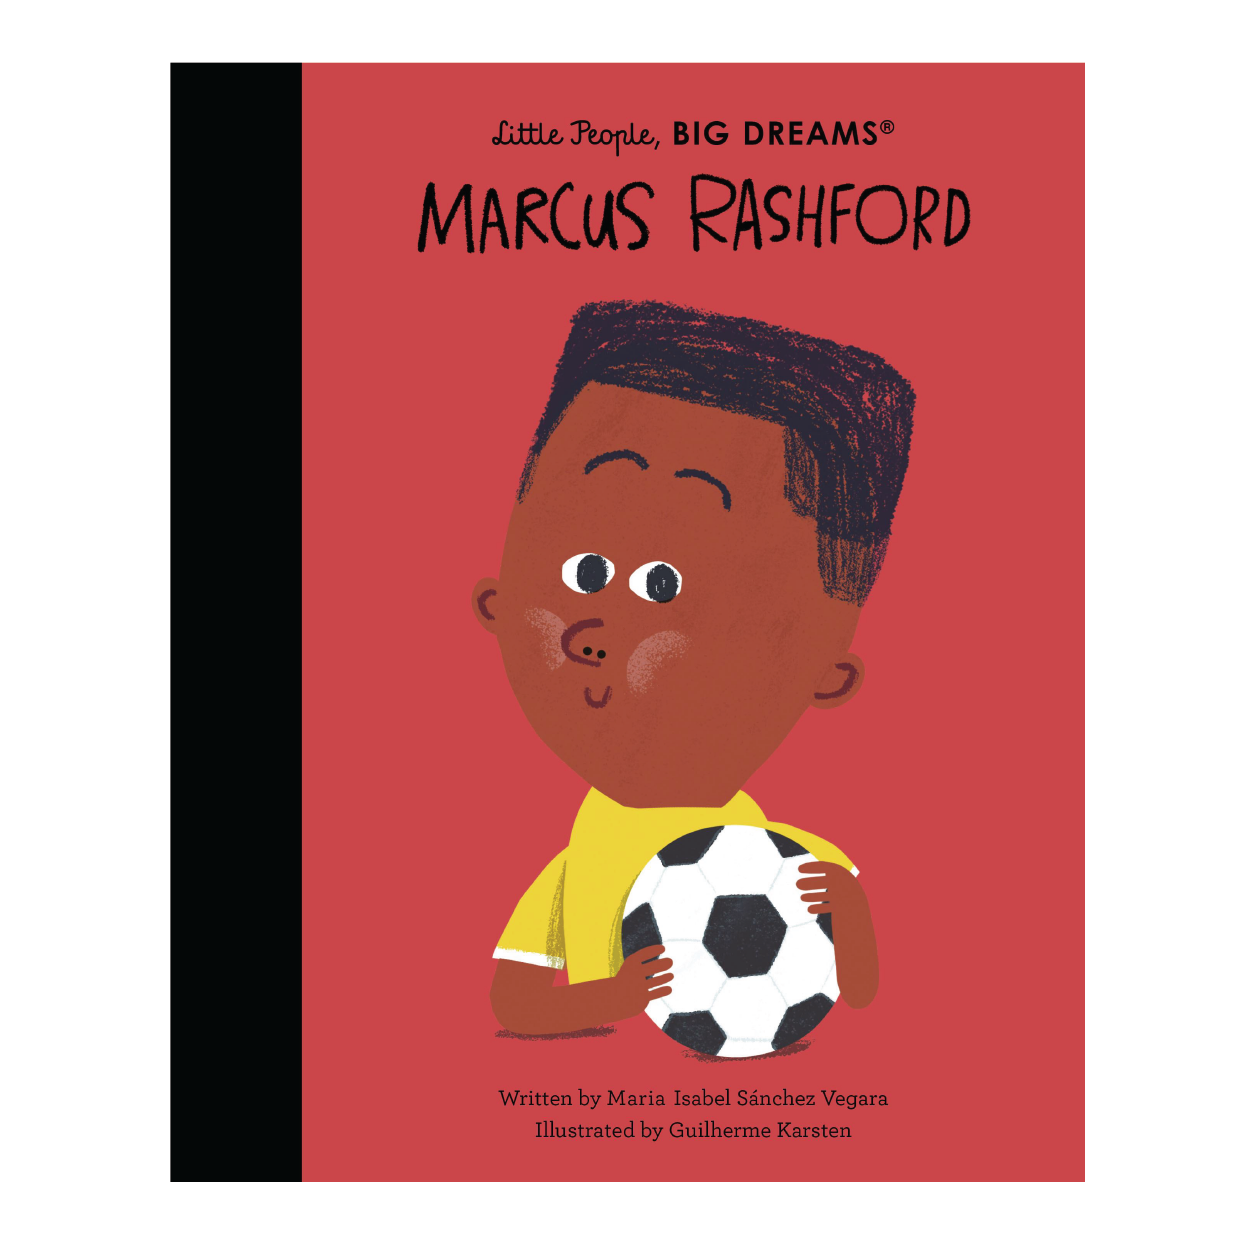 Little People, Big Dreams: Marcus Rashford